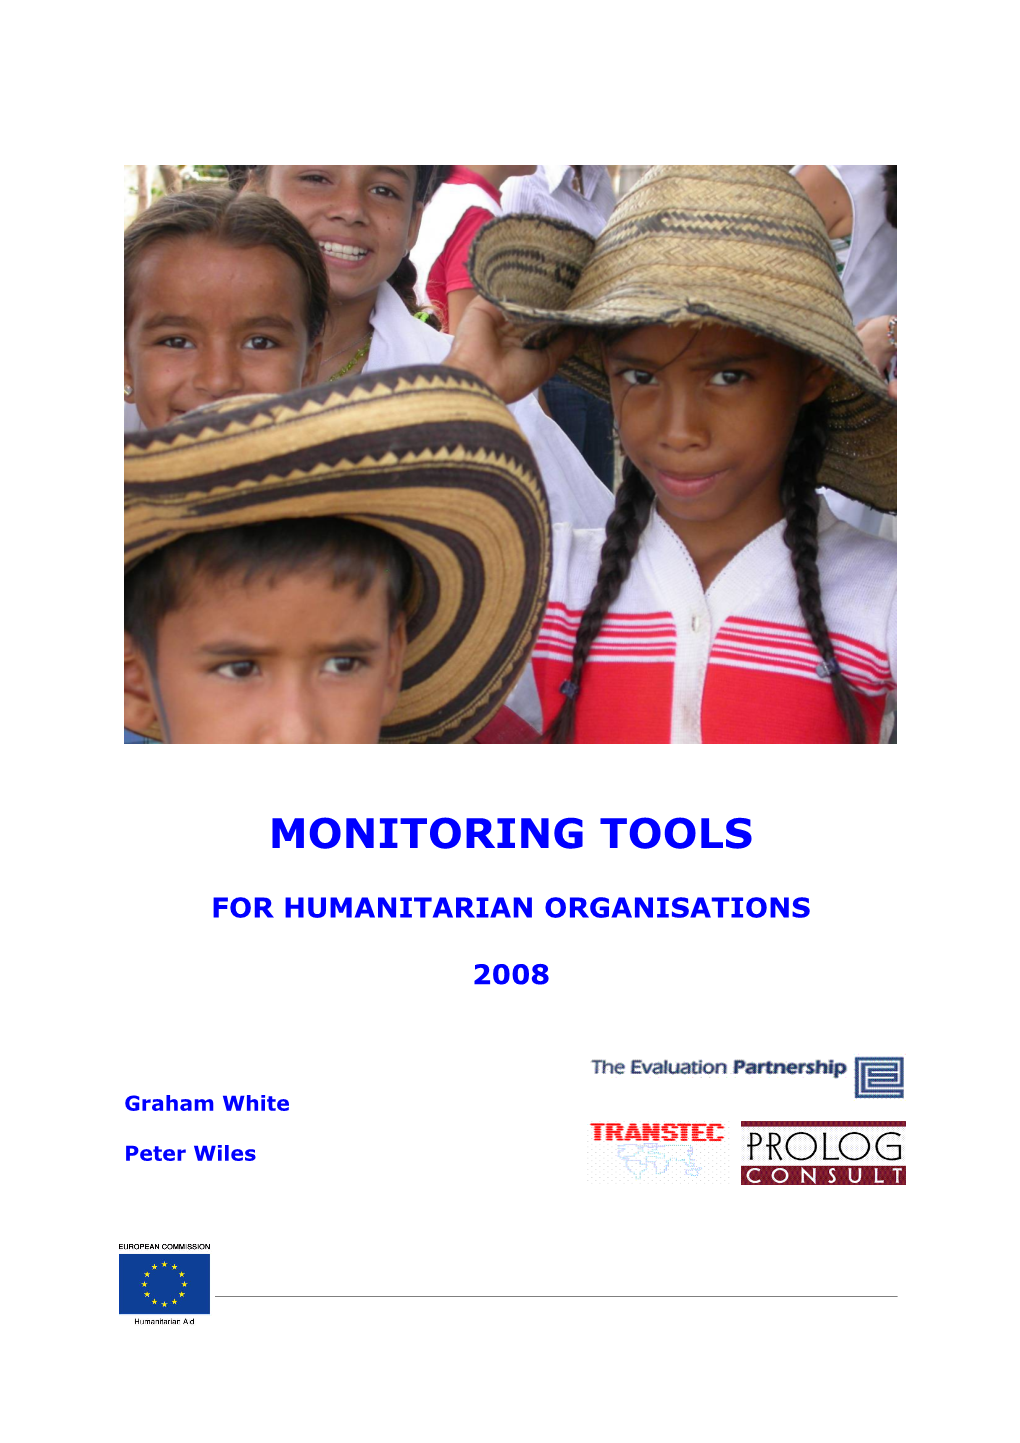 ECHO Monitoring Tools for Humanitarian Organisations